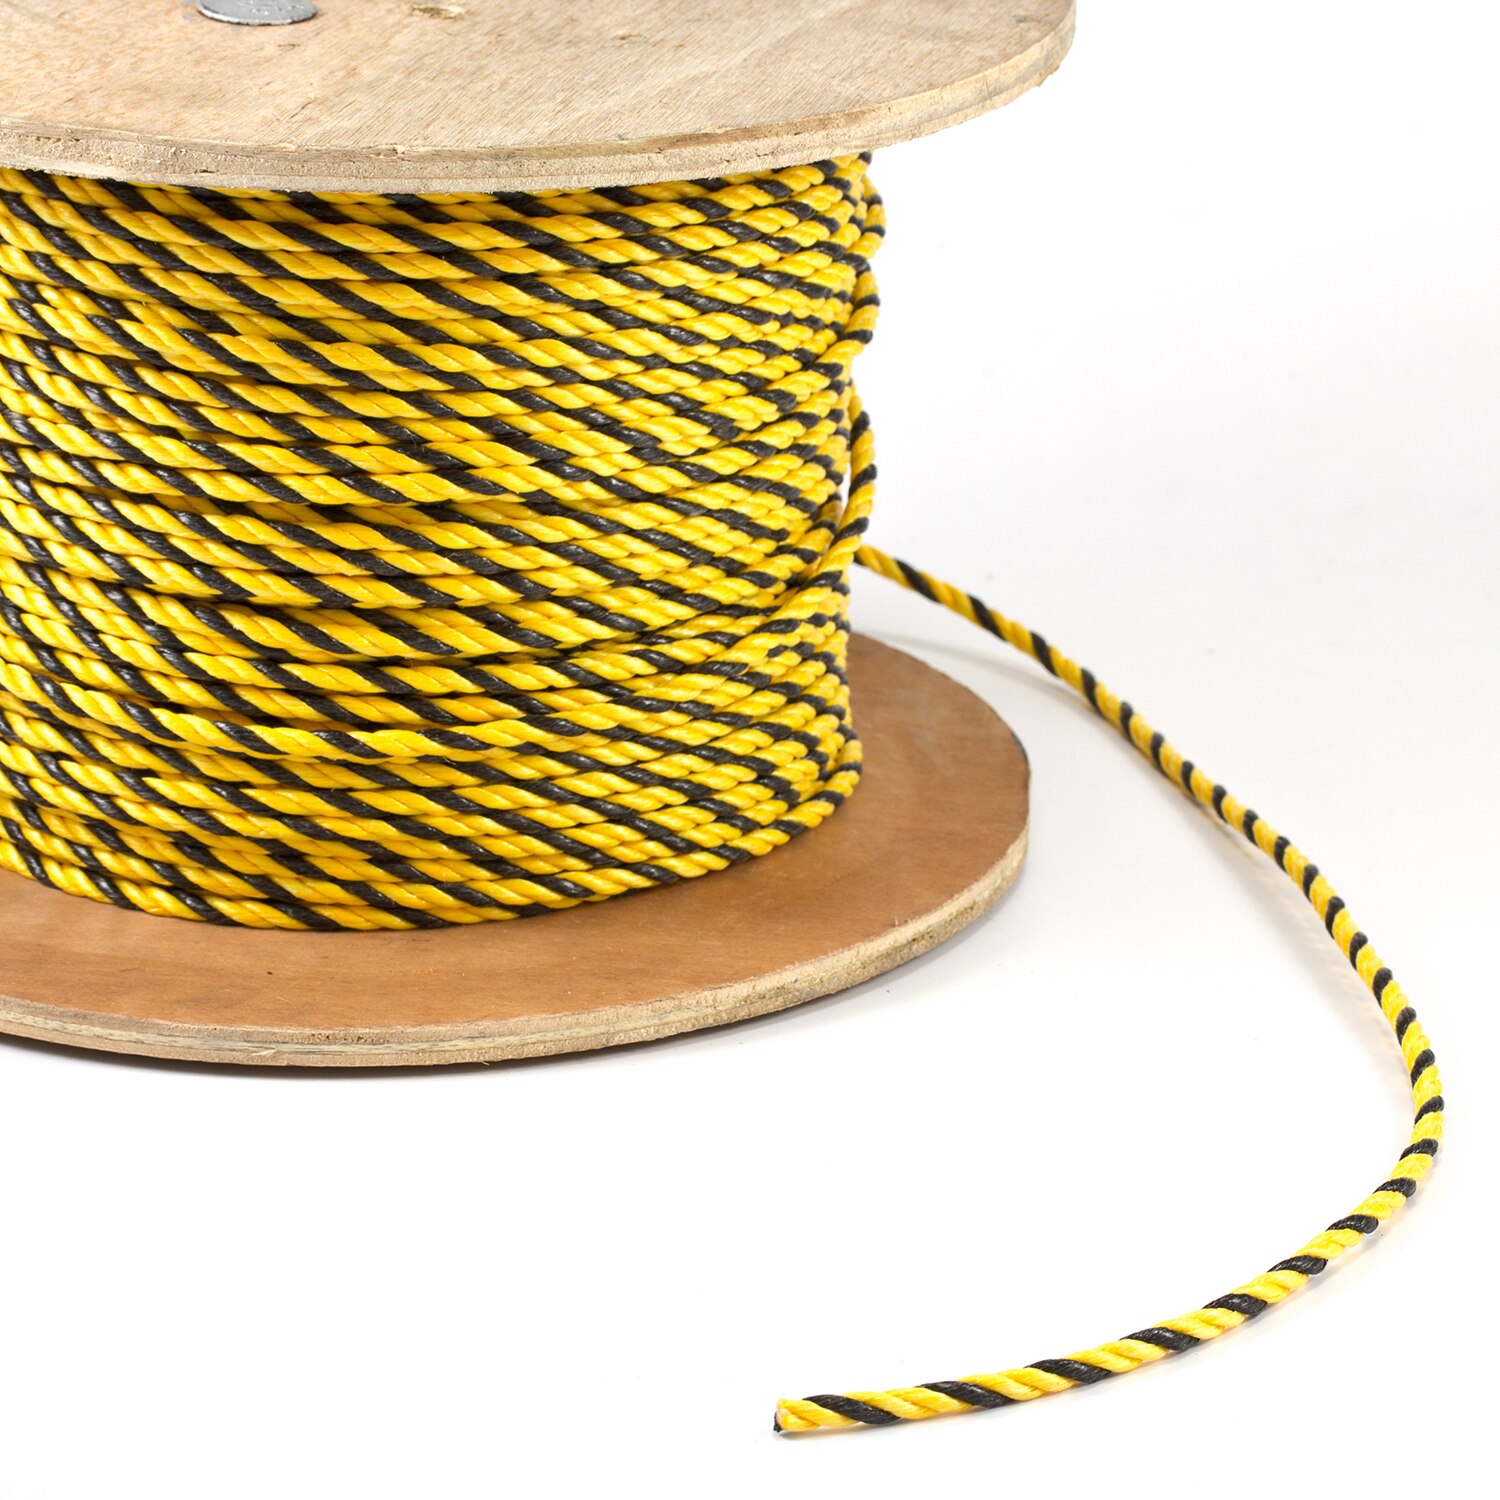 3-Strand Polypropylene Rope 1/4 x 600' Yellow/Black (SPO)